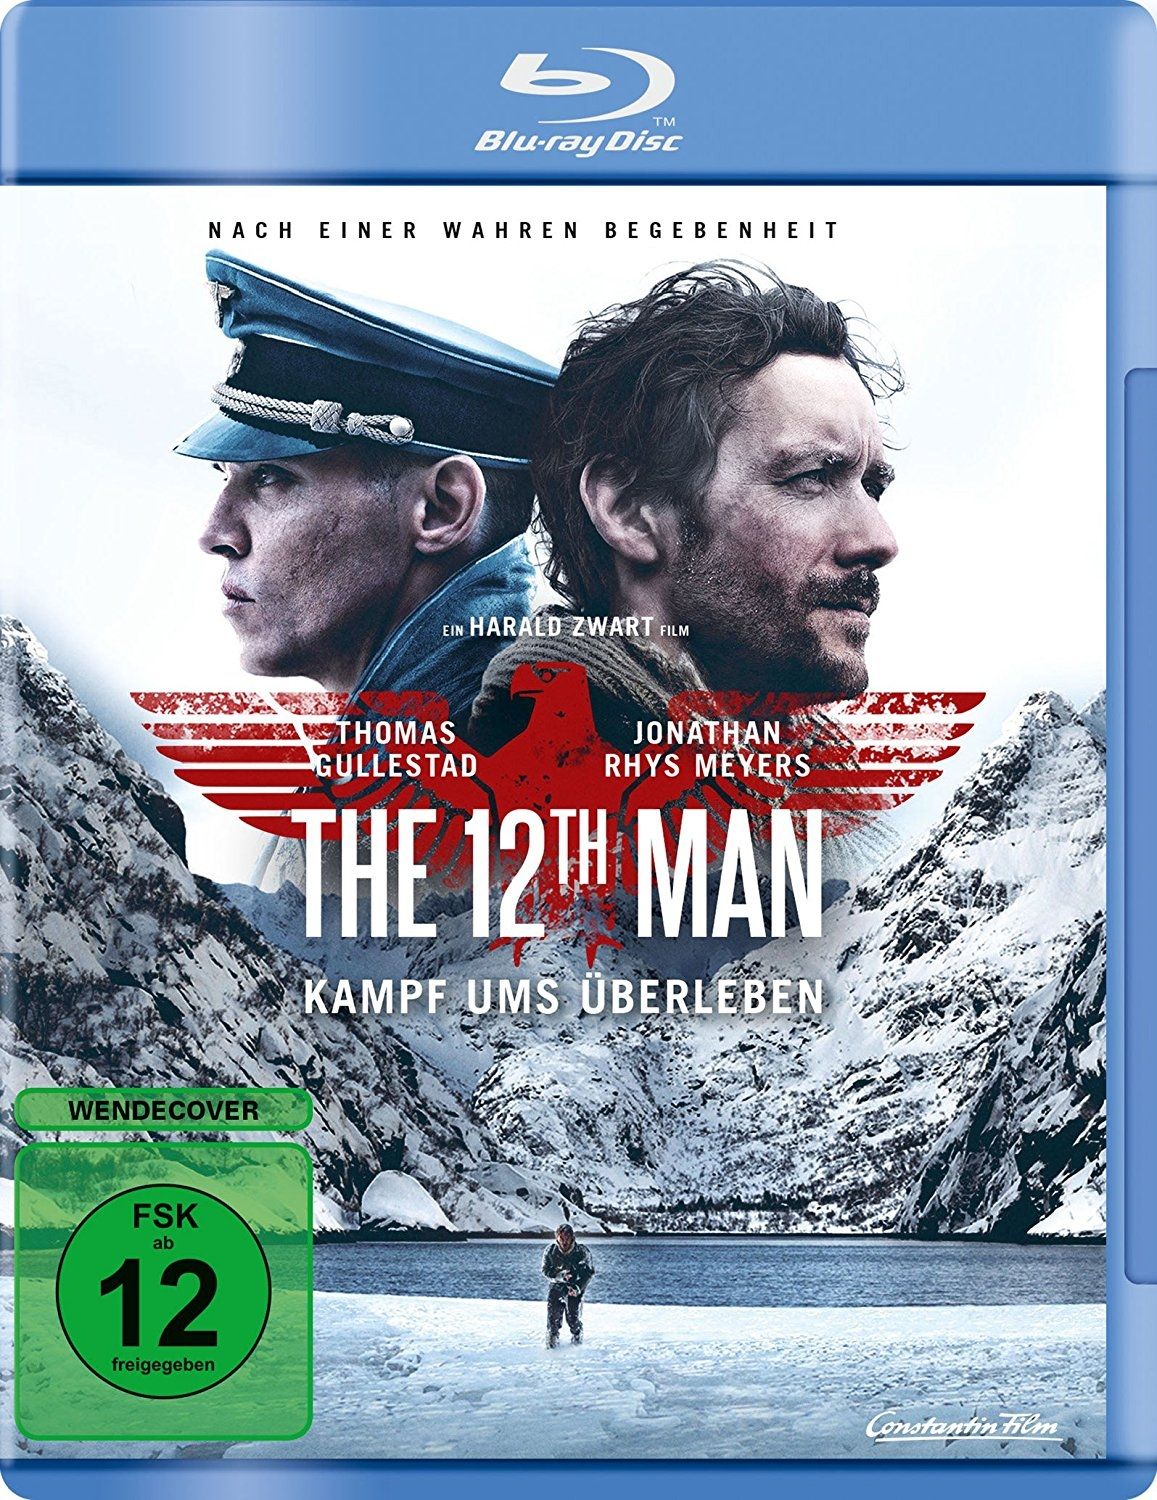 12th Man, The - Kampf ums Überleben (BLURAY)